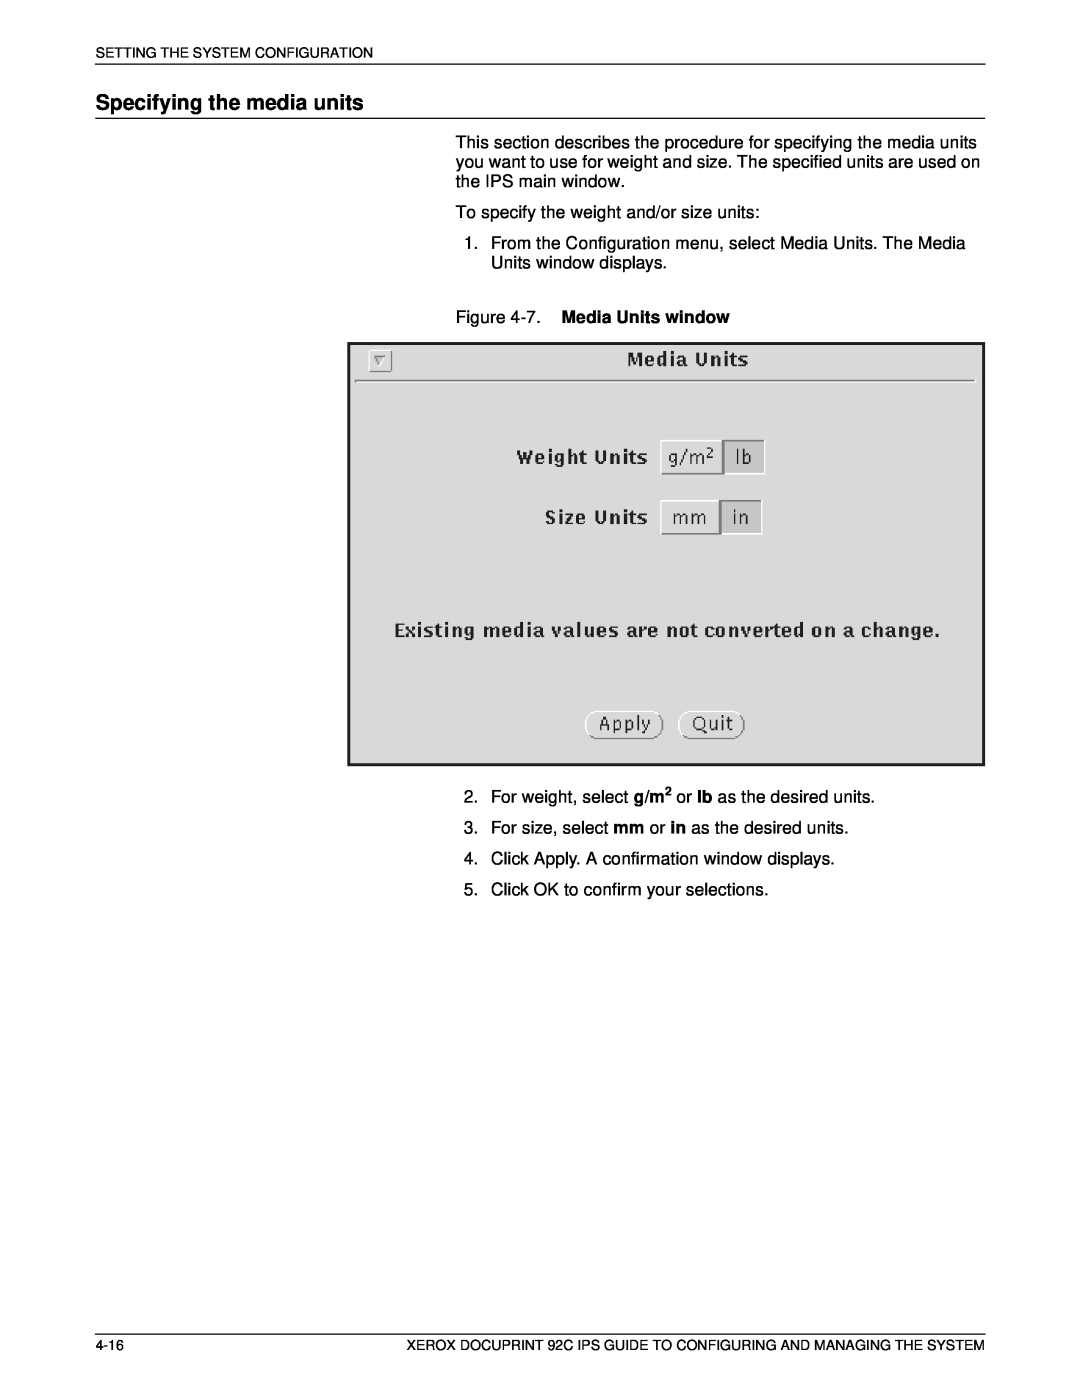 Xerox 92C IPS manual Specifying the media units, 7. Media Units window 